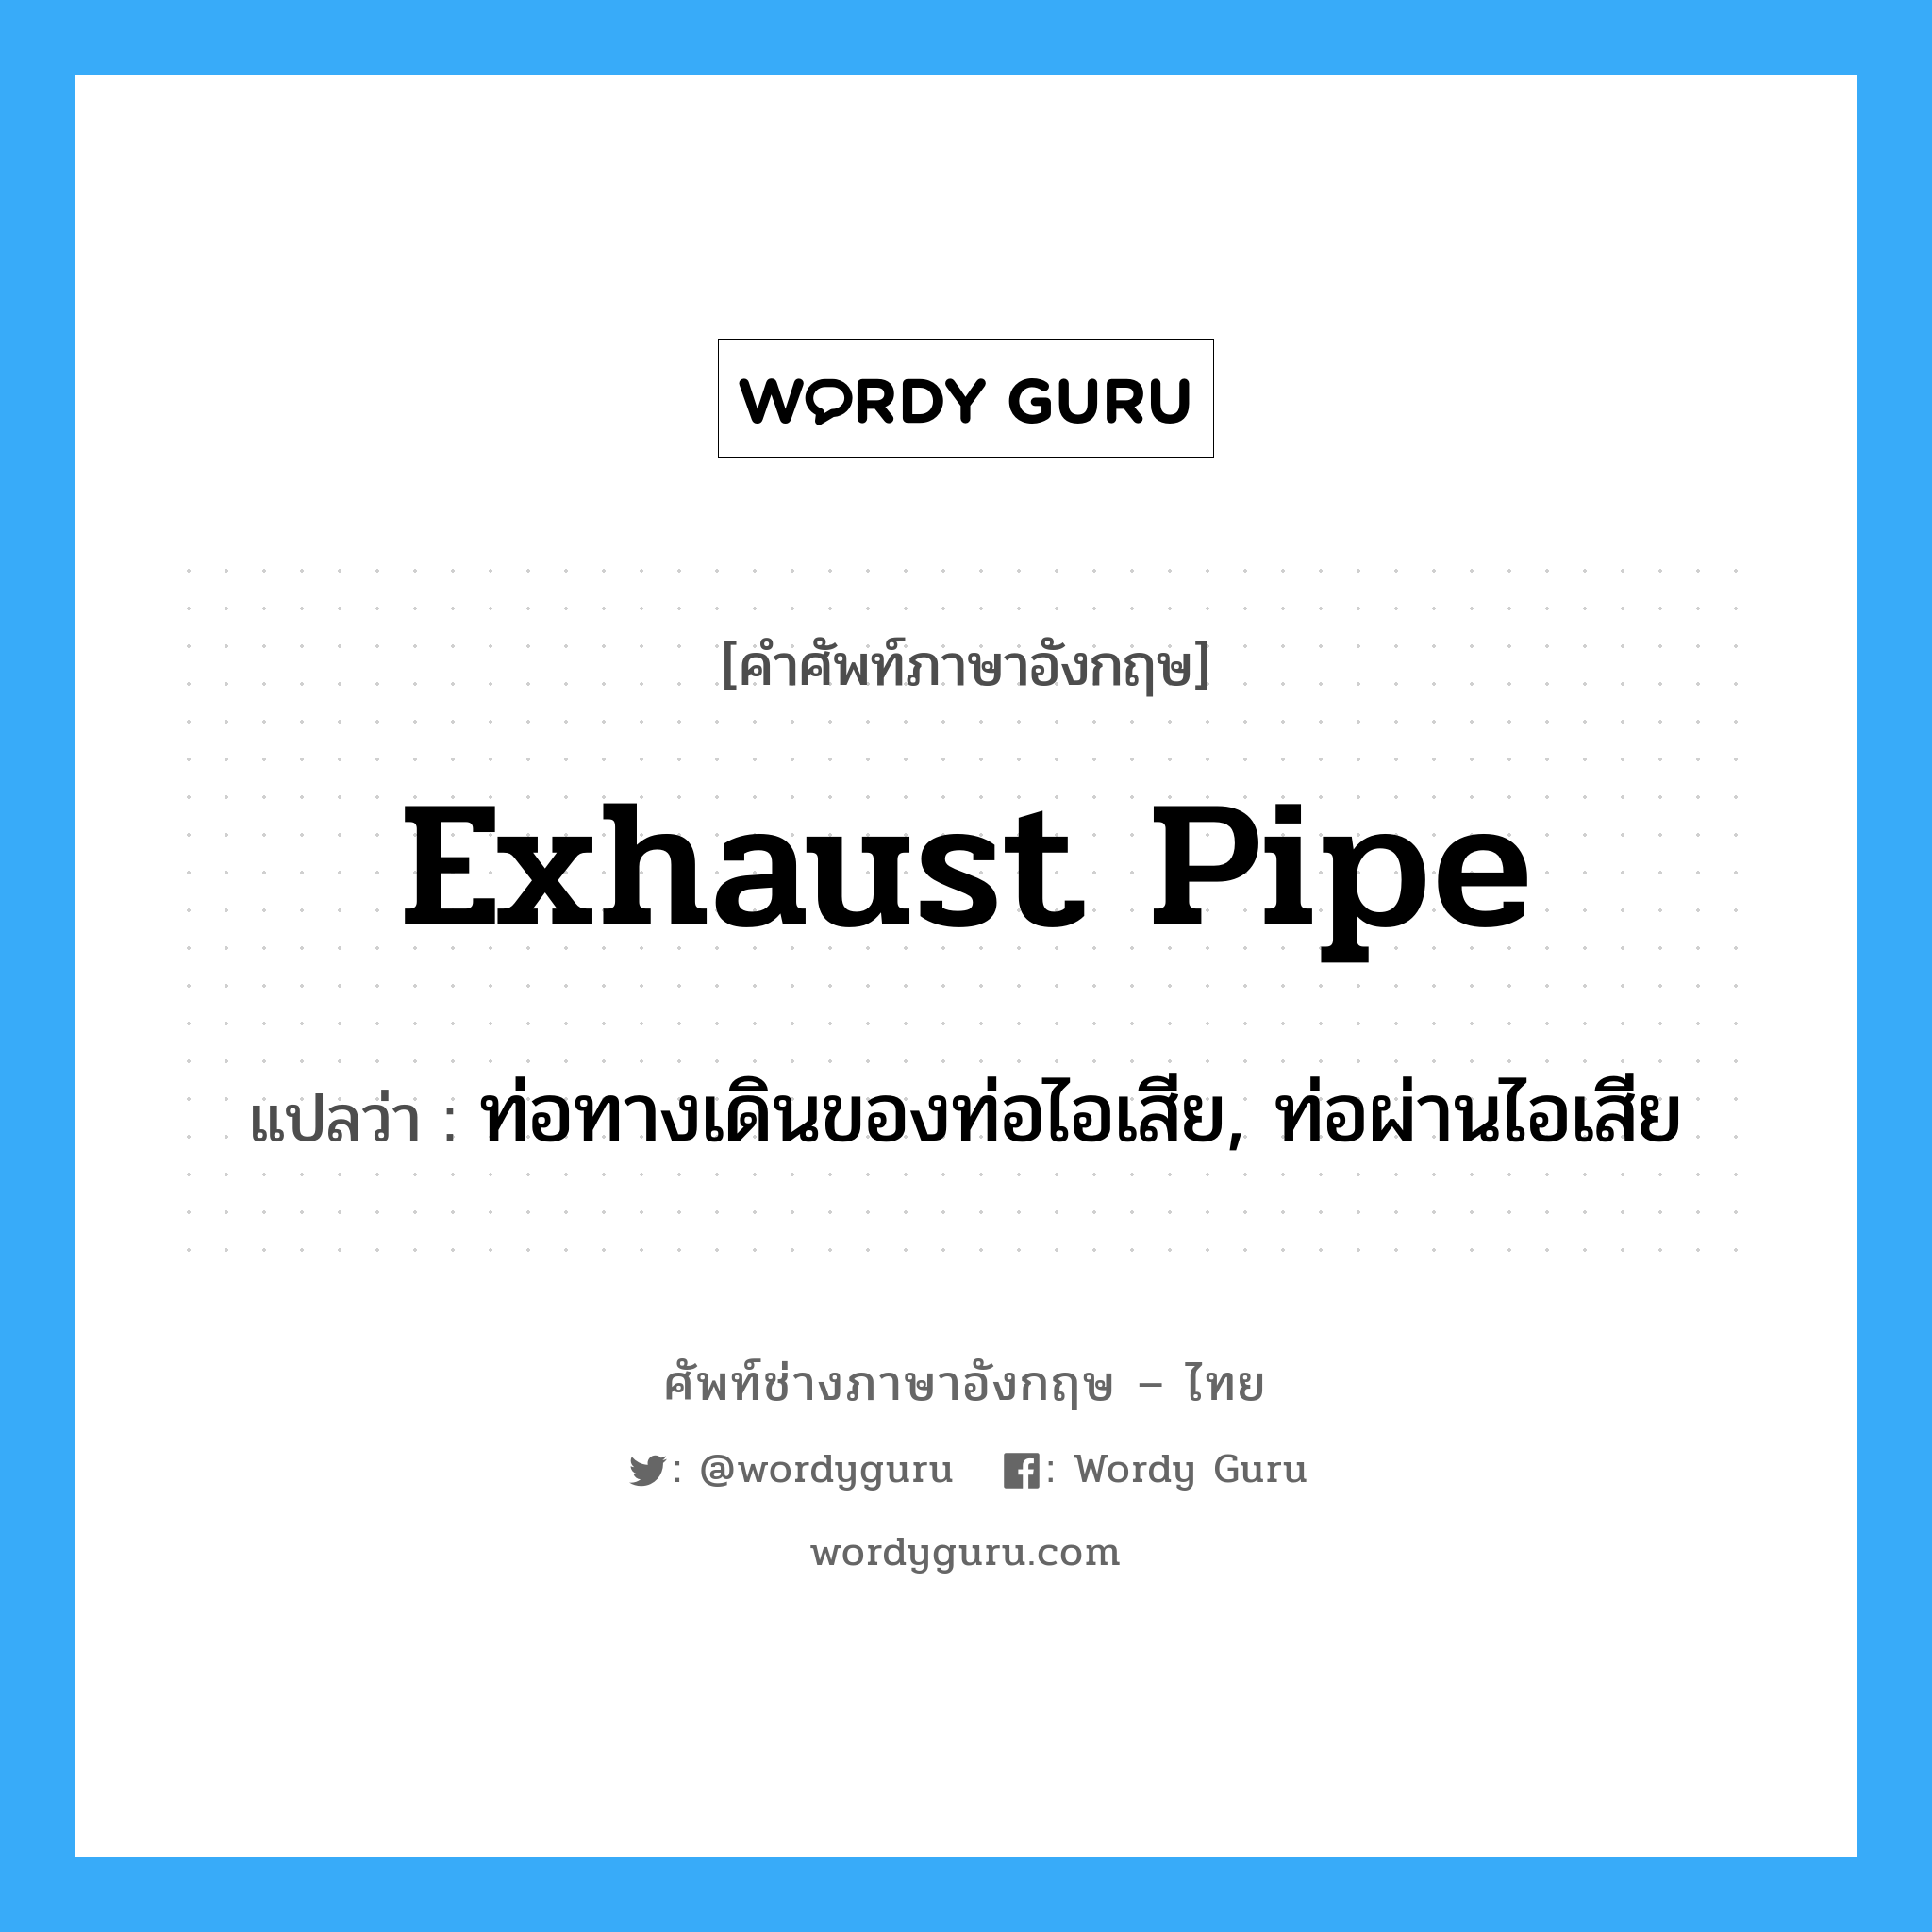 exhaust pipe แปลว่า?, คำศัพท์ช่างภาษาอังกฤษ - ไทย exhaust pipe คำศัพท์ภาษาอังกฤษ exhaust pipe แปลว่า ท่อทางเดินของท่อไอเสีย, ท่อผ่านไอเสีย